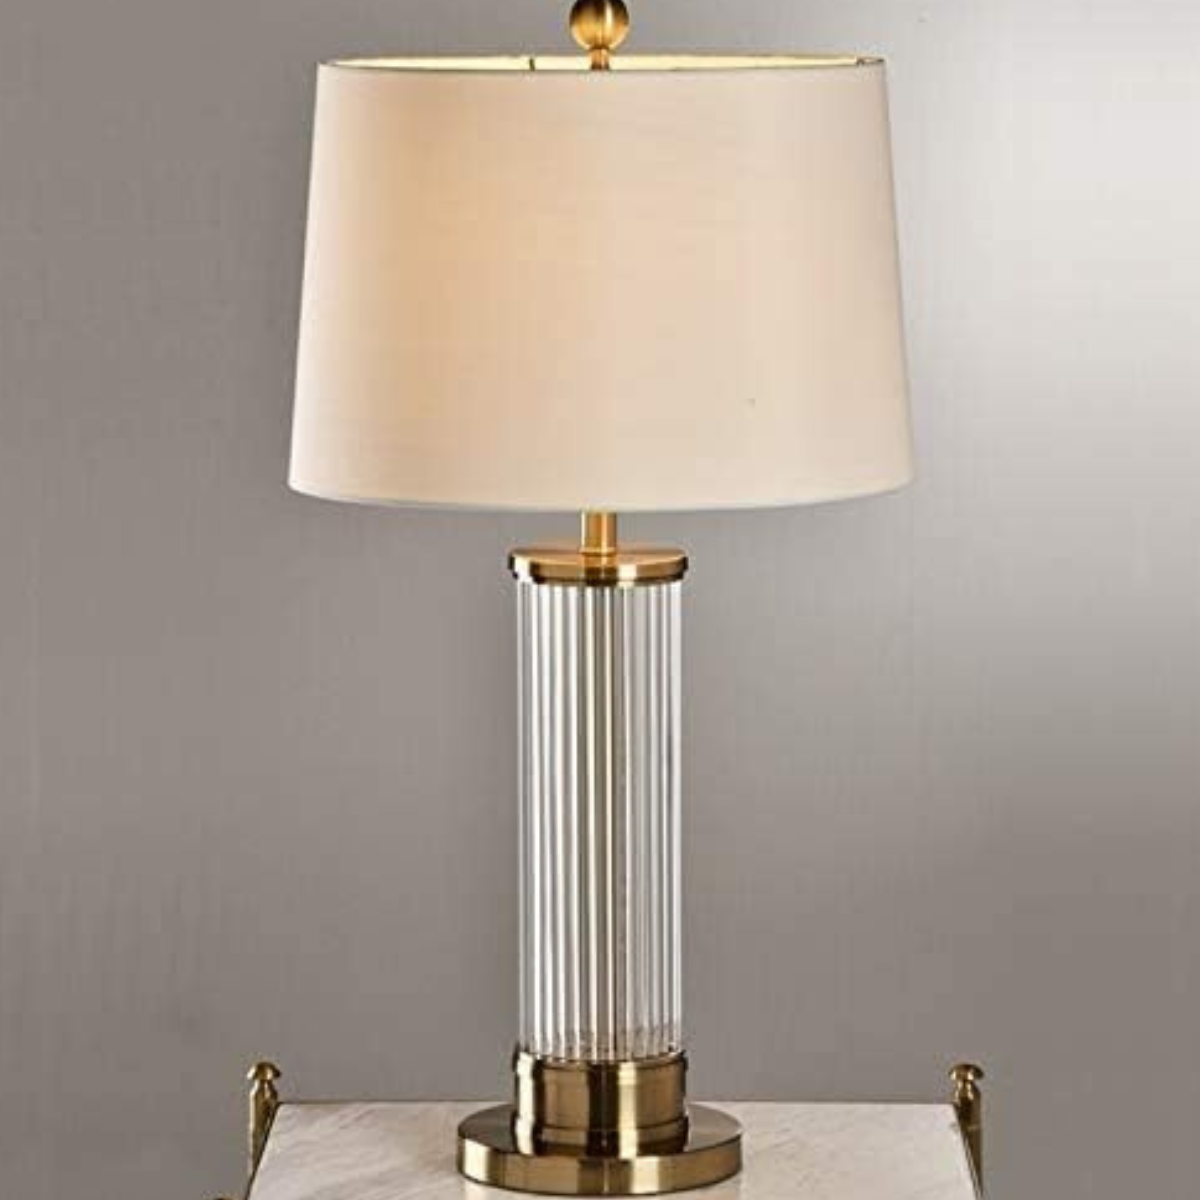 Reneva-Crystal-Based-Bedside-Table-Lamp-2